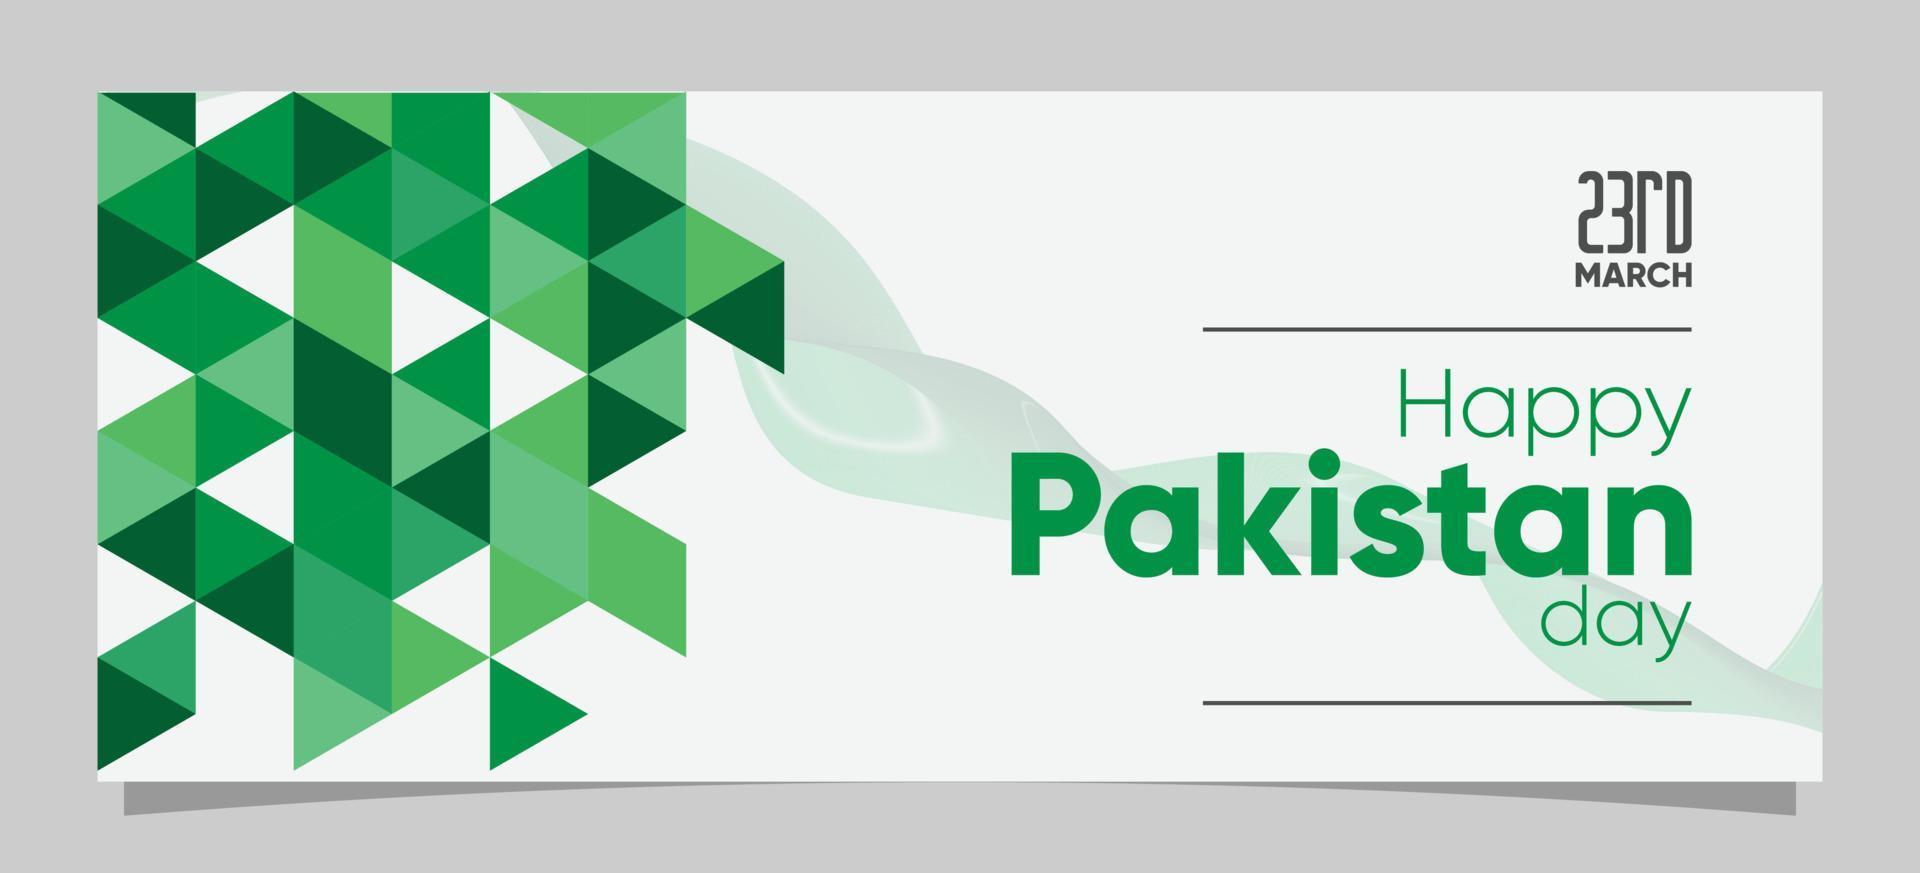 glücklich Pakistan Tag 23 März Sozial Startseite Post abstrakt vektor